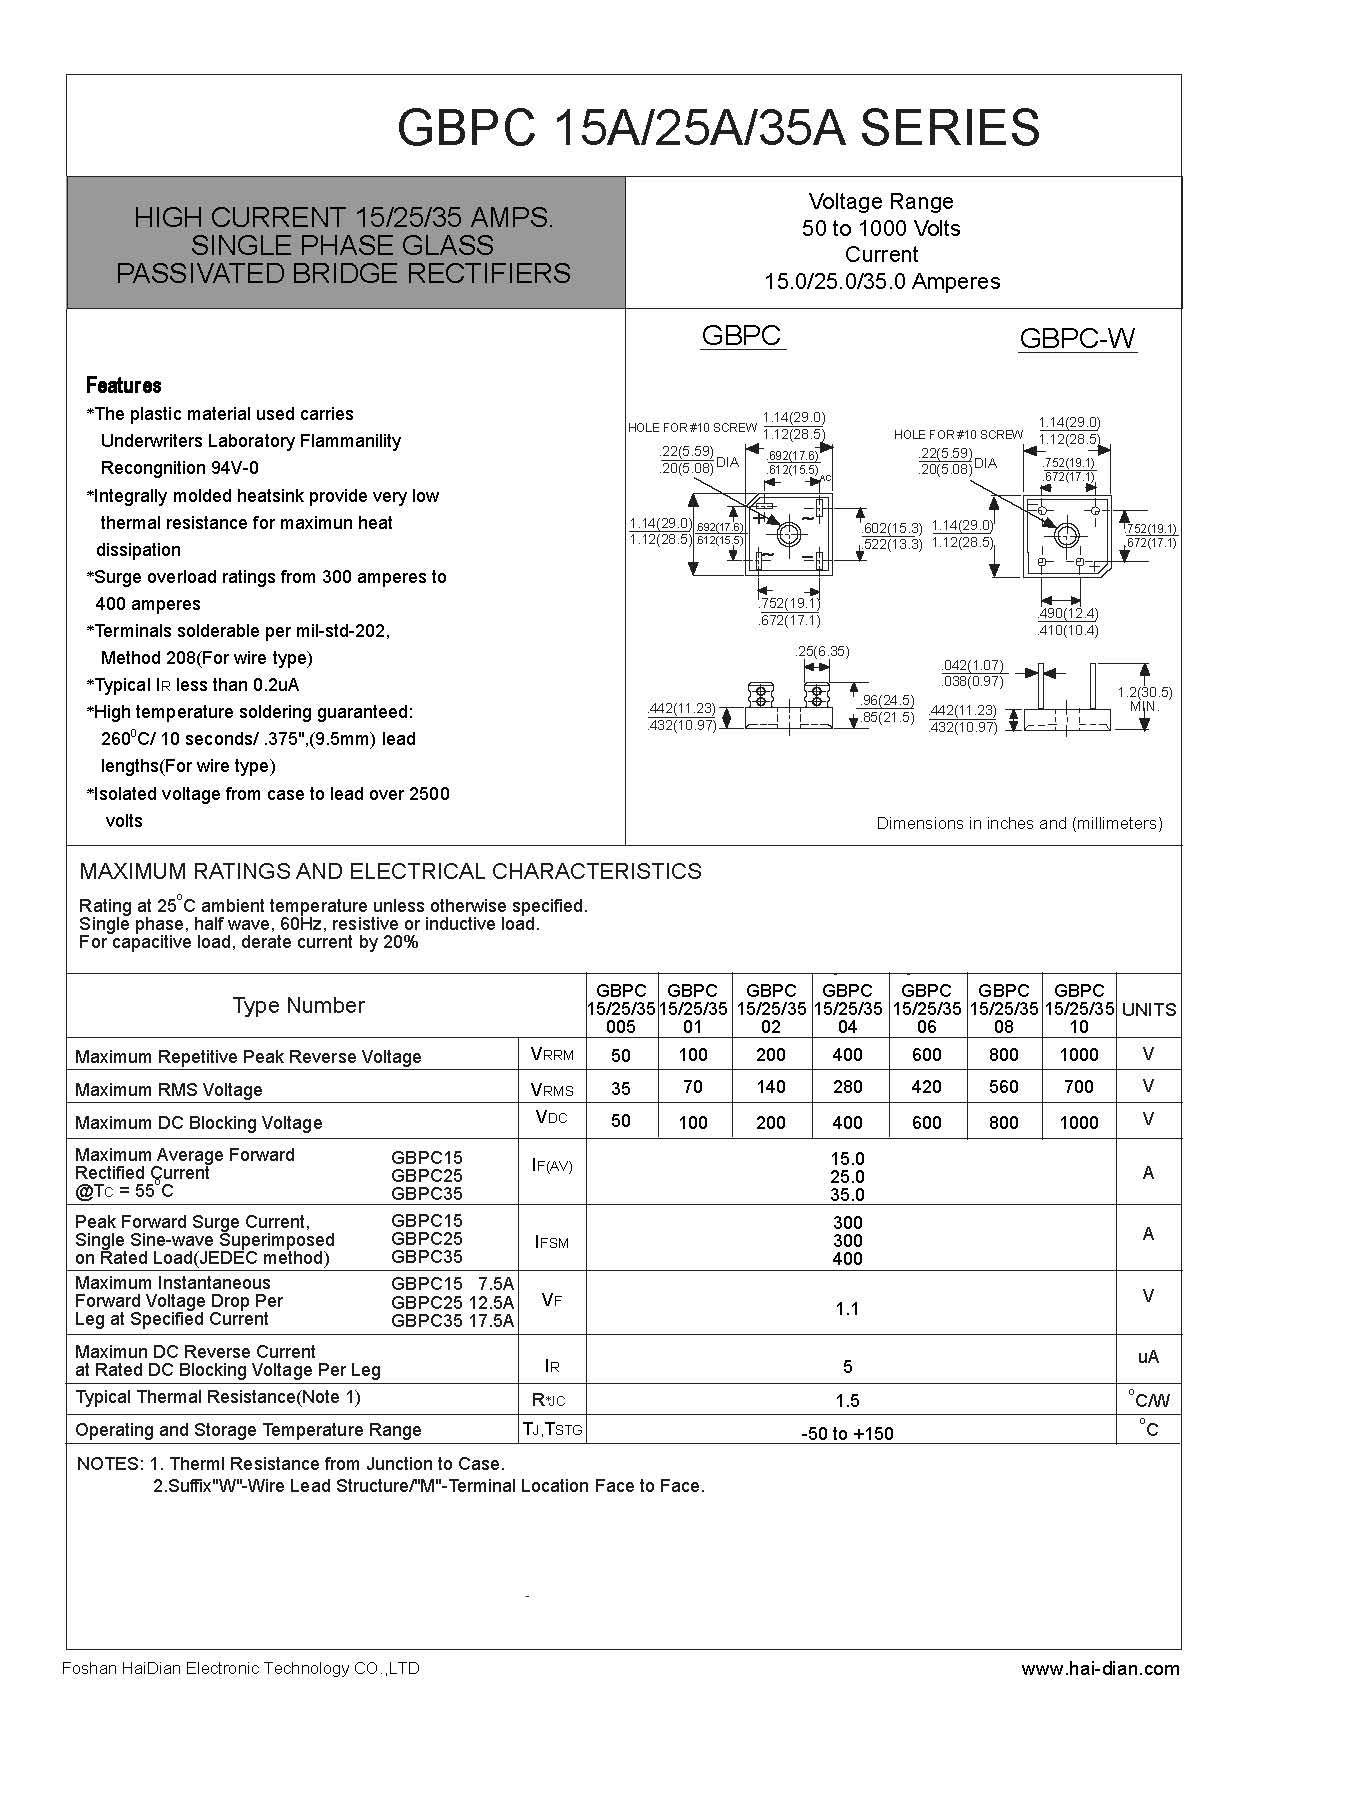 GBPC3501桥式整流器(整流桥堆)-- 佛山海电电子科技有限公司